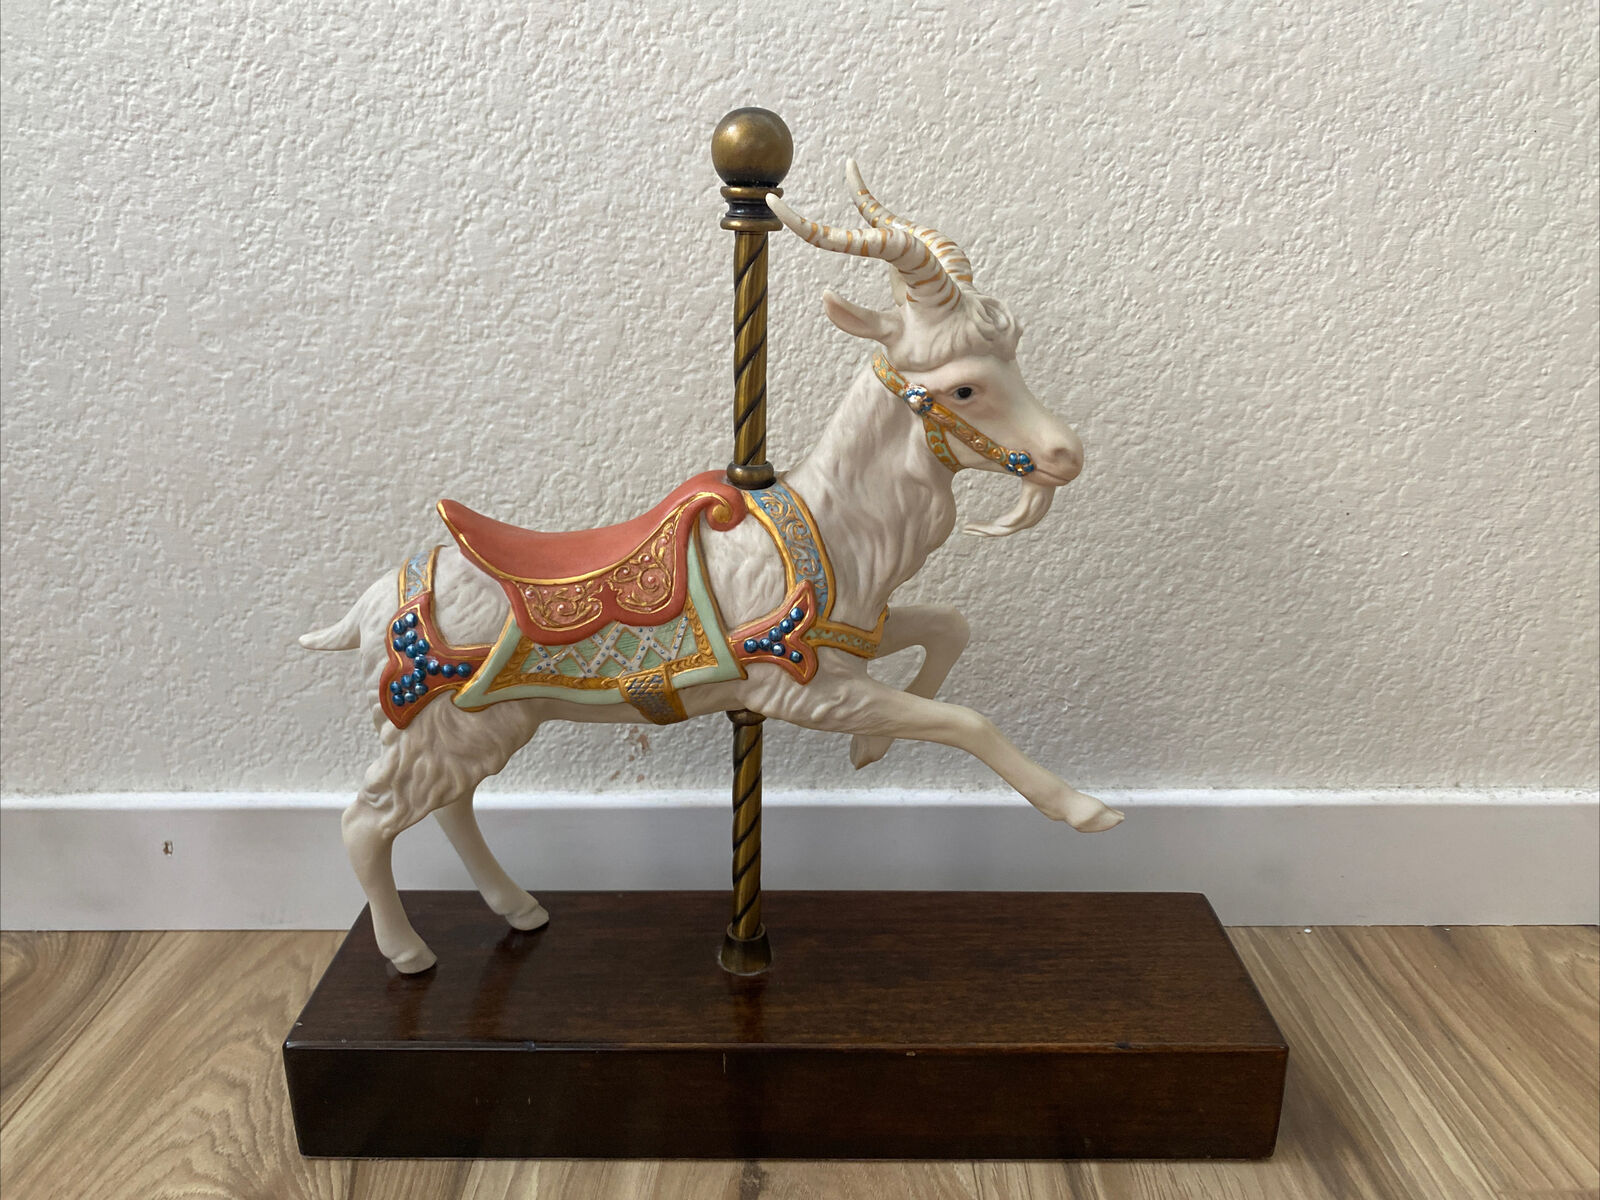  Vintage CYBIS Ltd. Ed. Carousel Goat Figurine #629216, c. 1973